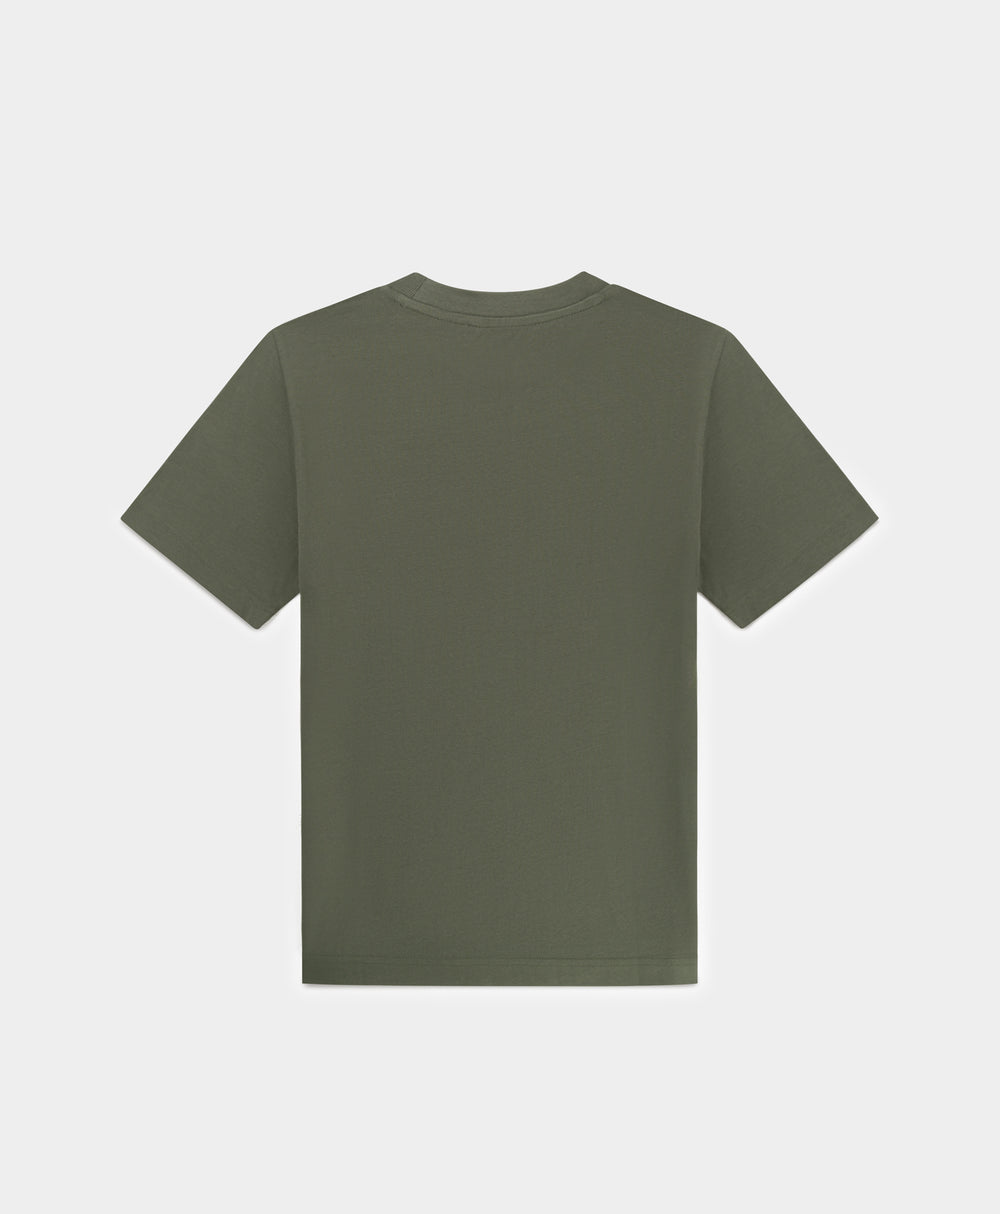 DP - Chimera Green Circle T-Shirt - Packshot - Rear